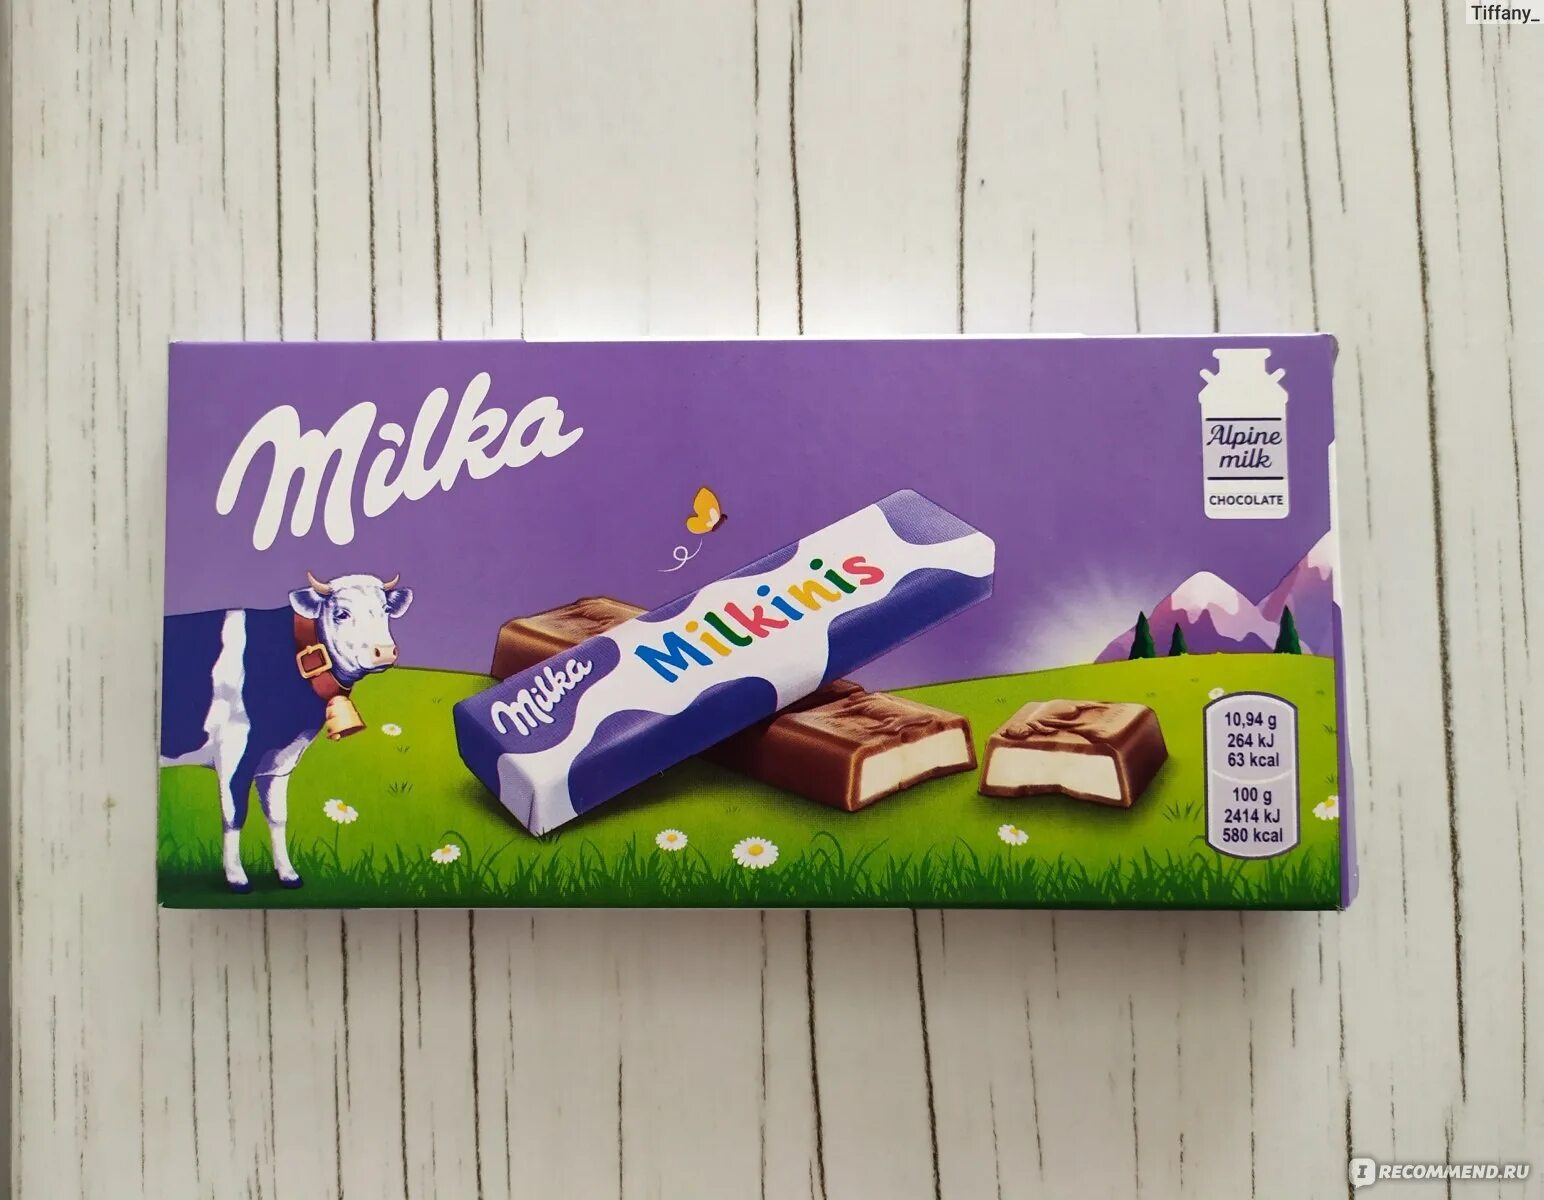 Milka milkinis шоколад. Шоколад Milka milkinis Sticks. Пародия на шоколад Милка. Шоколадка Милк пародия на Киндер. Киндер милка слайс